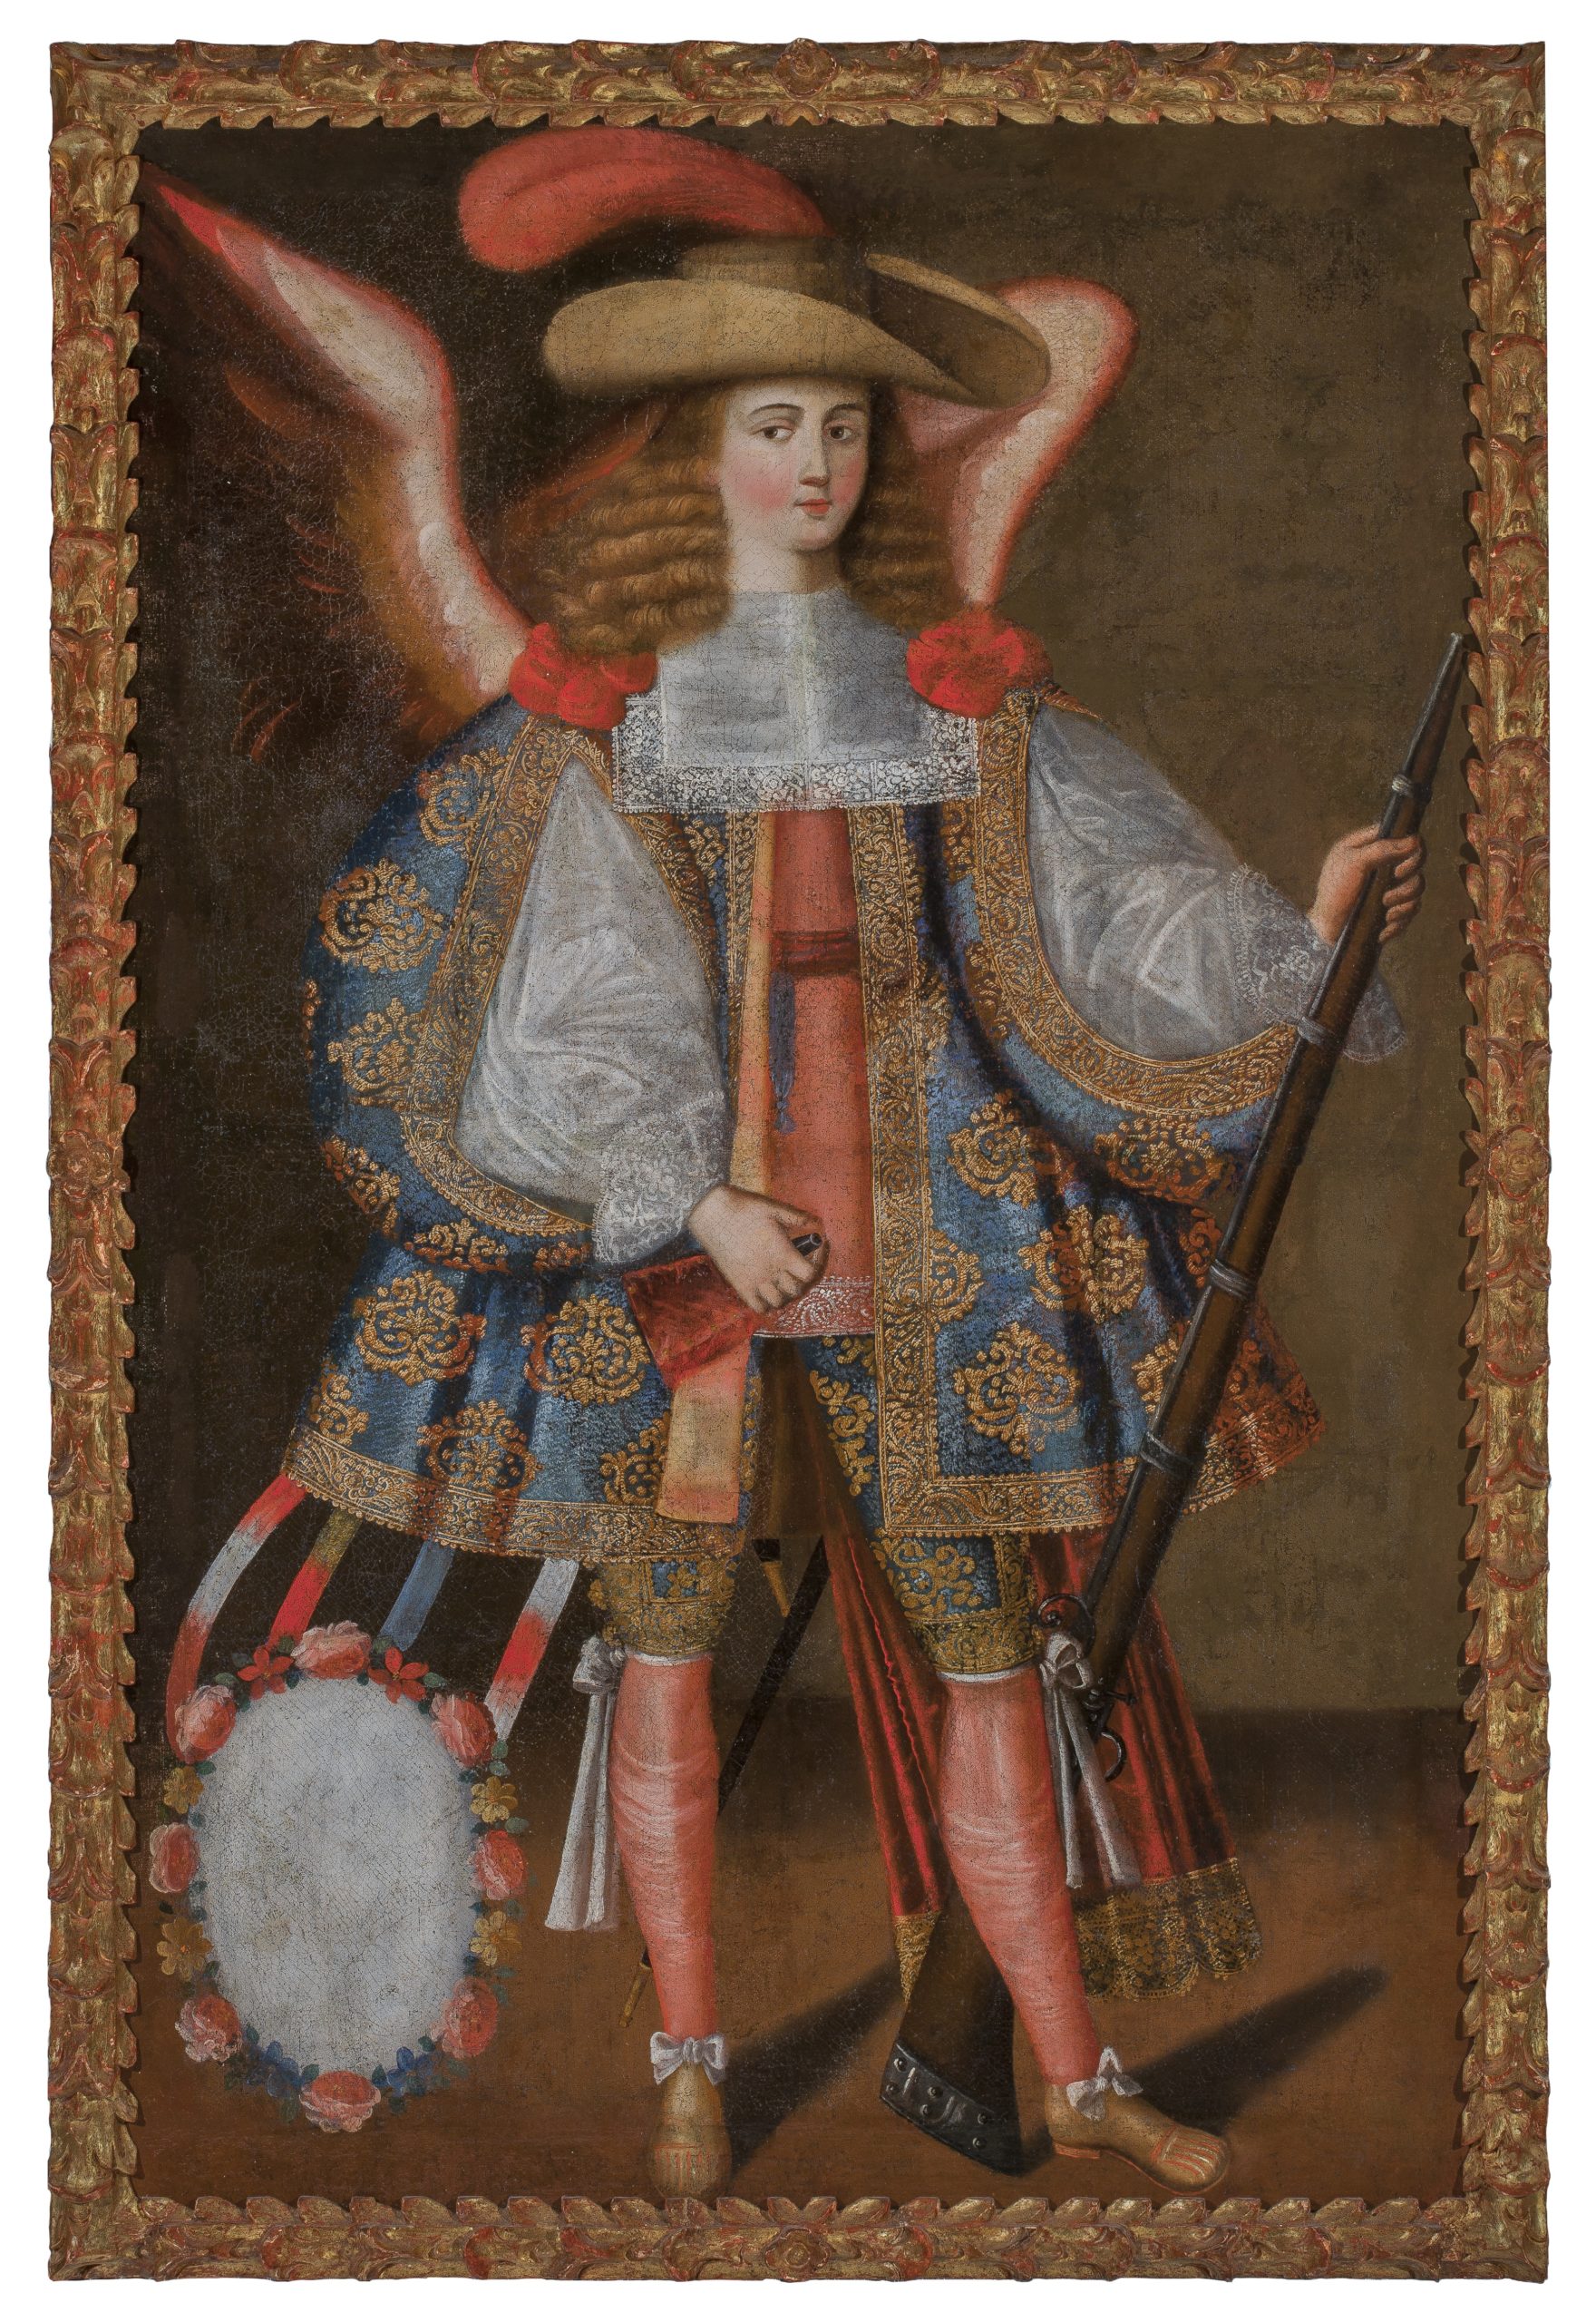 A painting of an angel carrying a harquebus (matchlock gun).